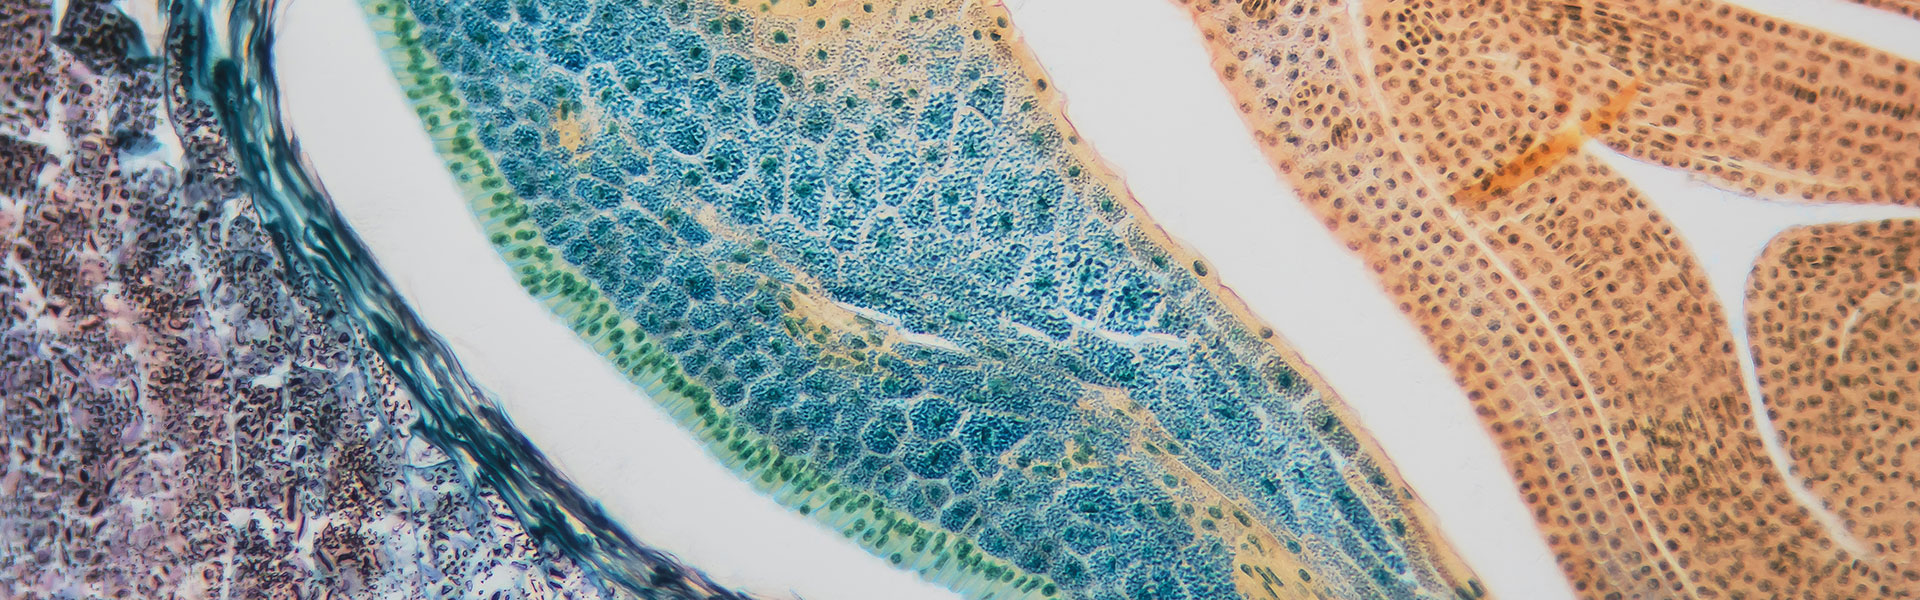 cells-under-microscope